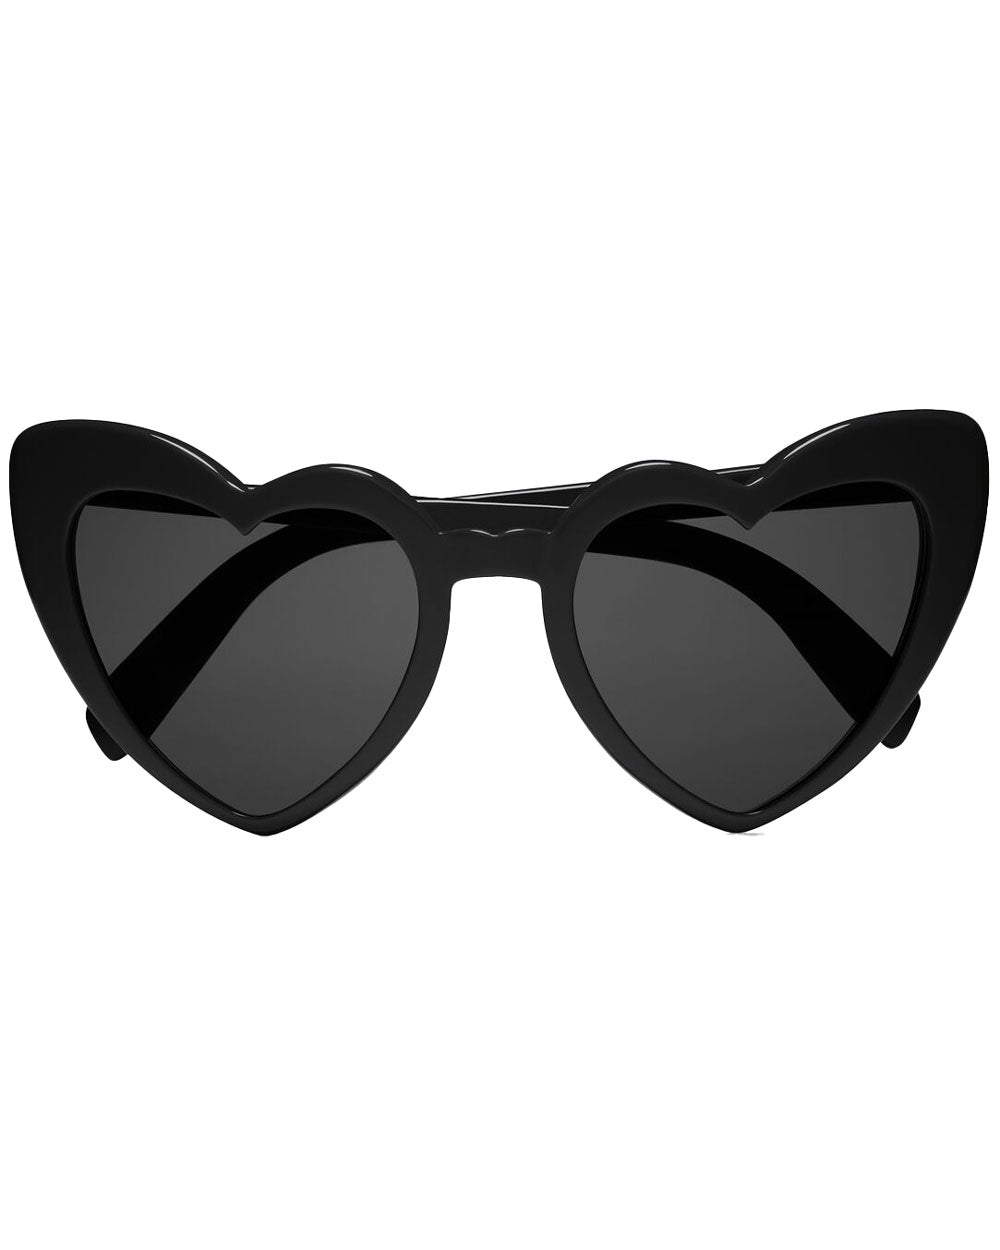 Lou Lou SL 181 Sunglasses in Black